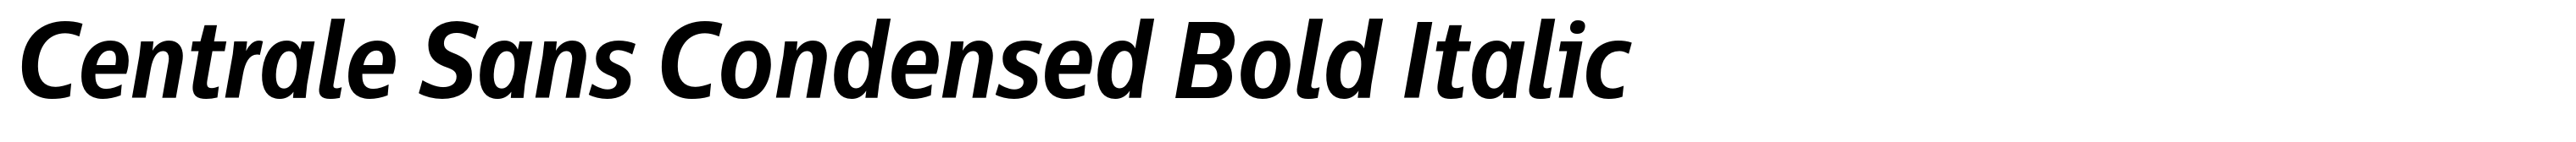 Centrale Sans Condensed Bold Italic